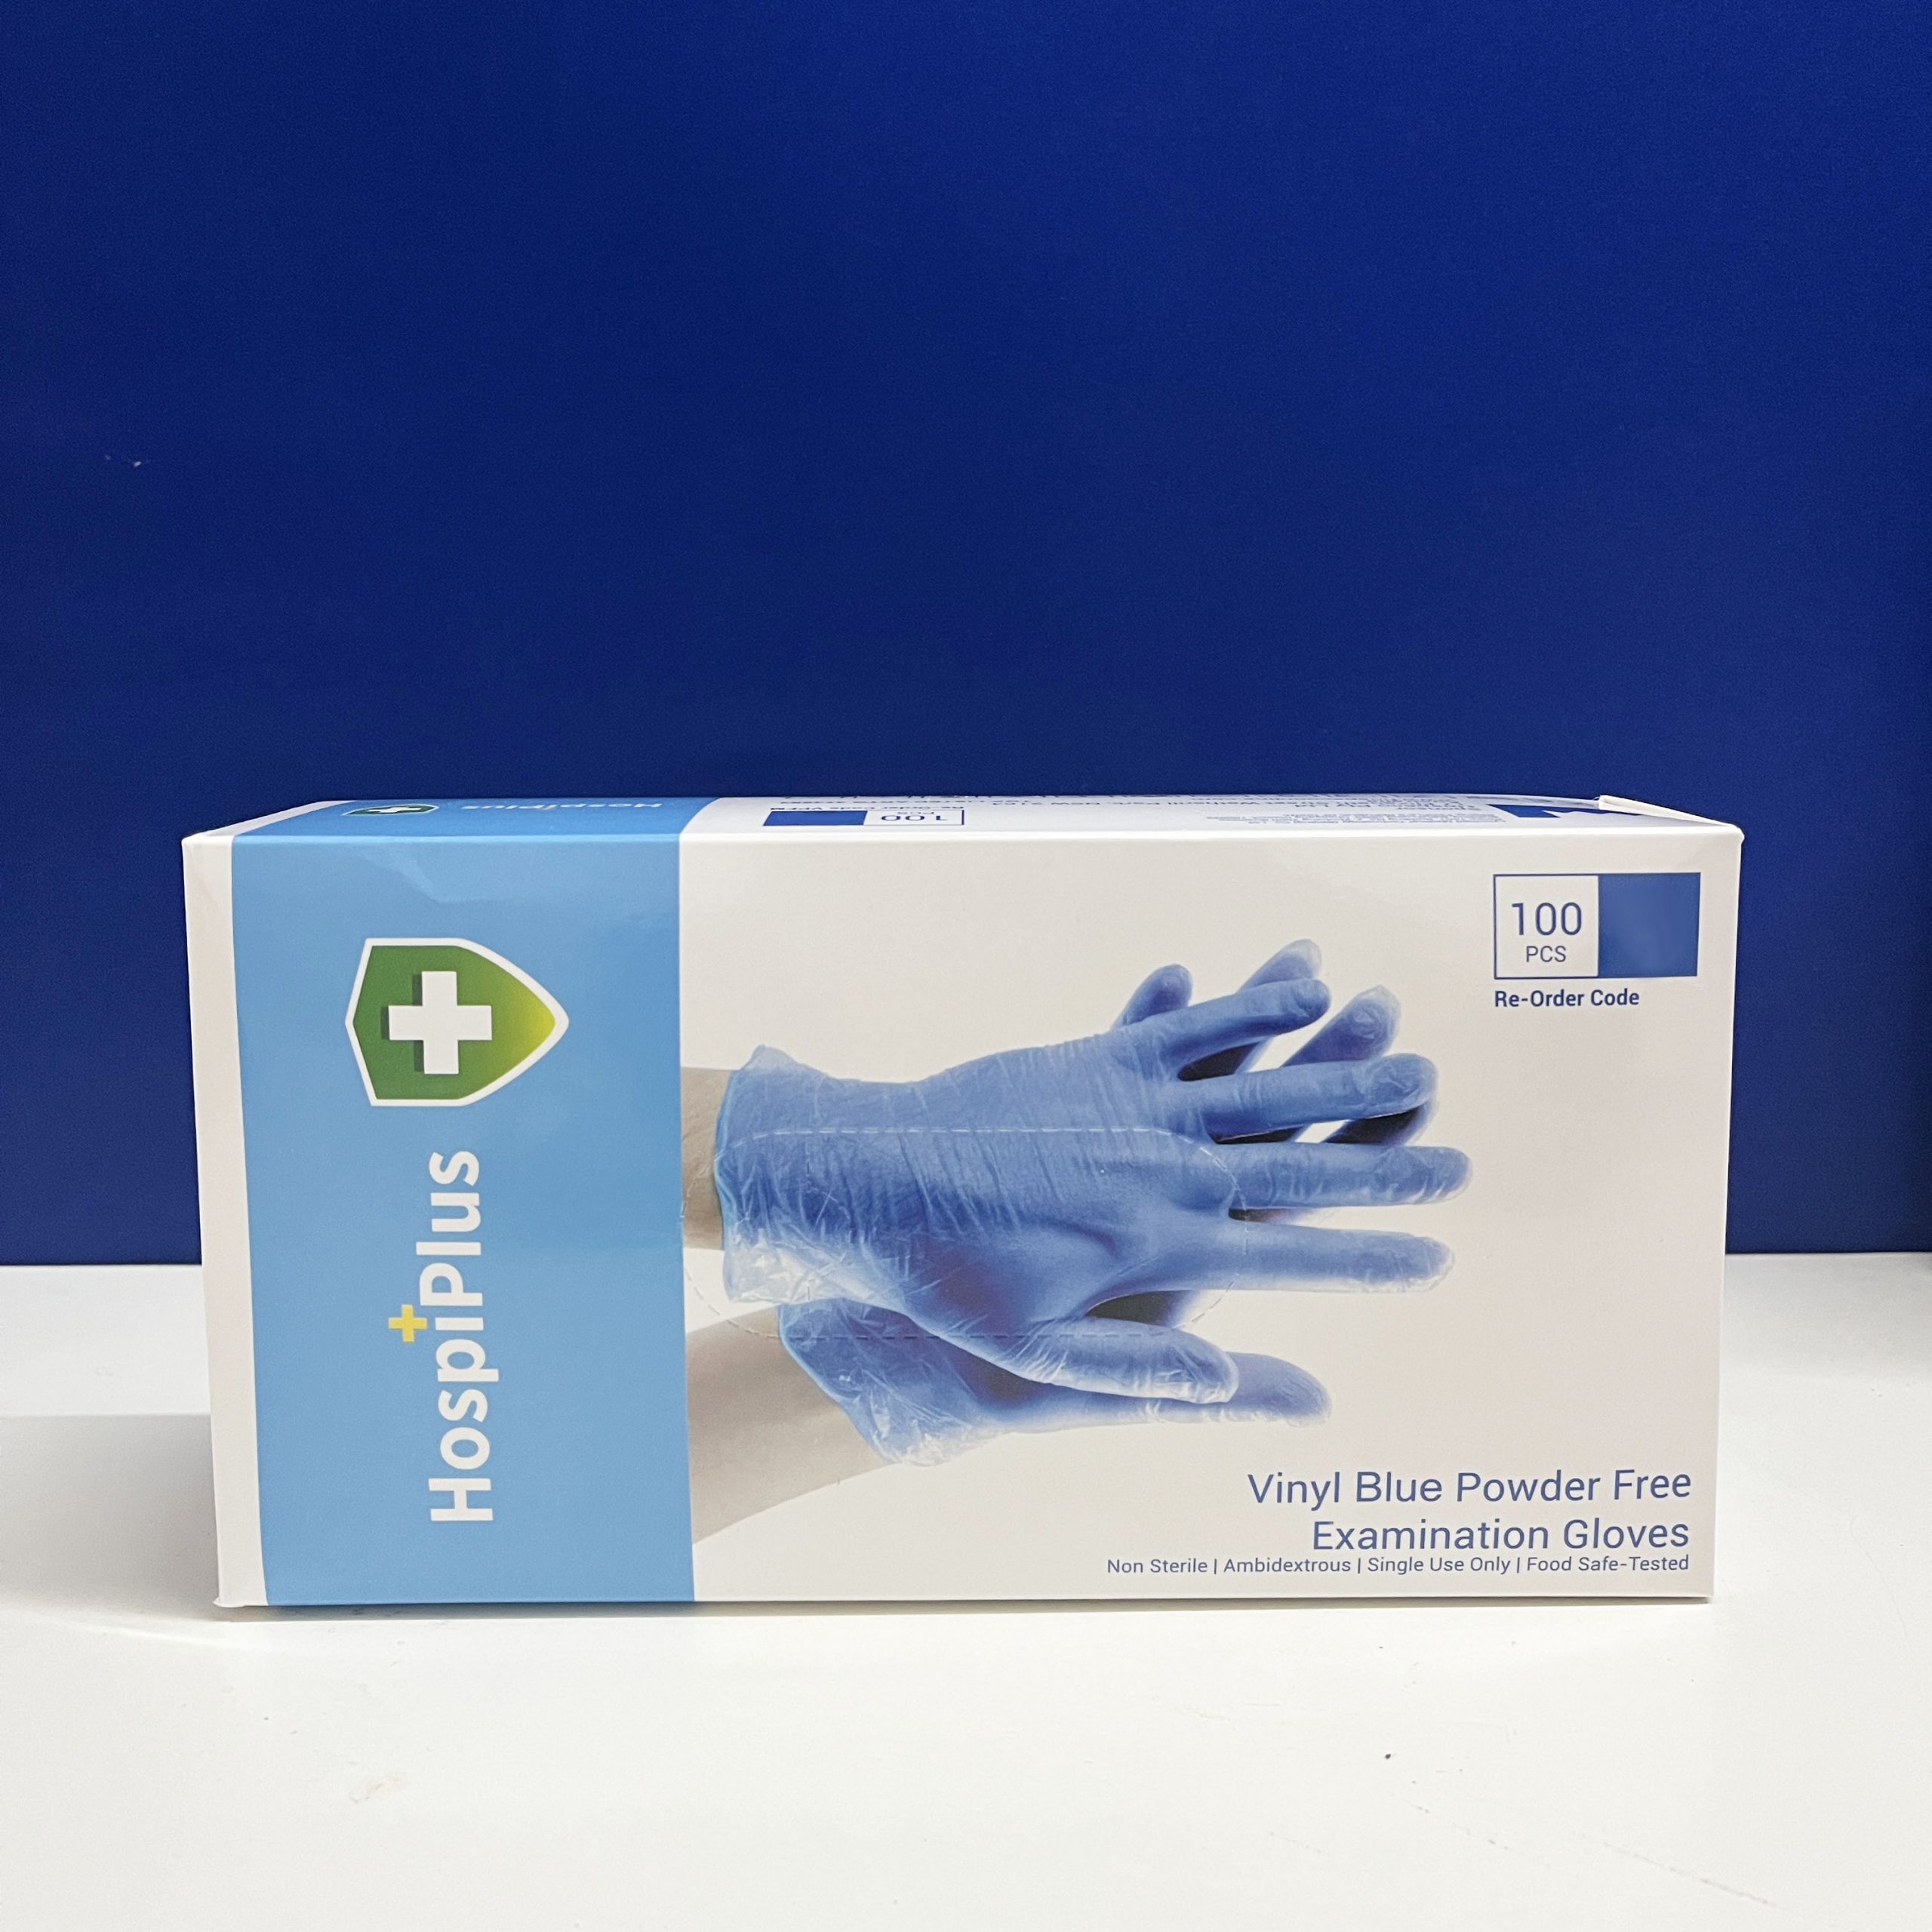 Vinyl Blue Powder Free Examination Gloves - Front